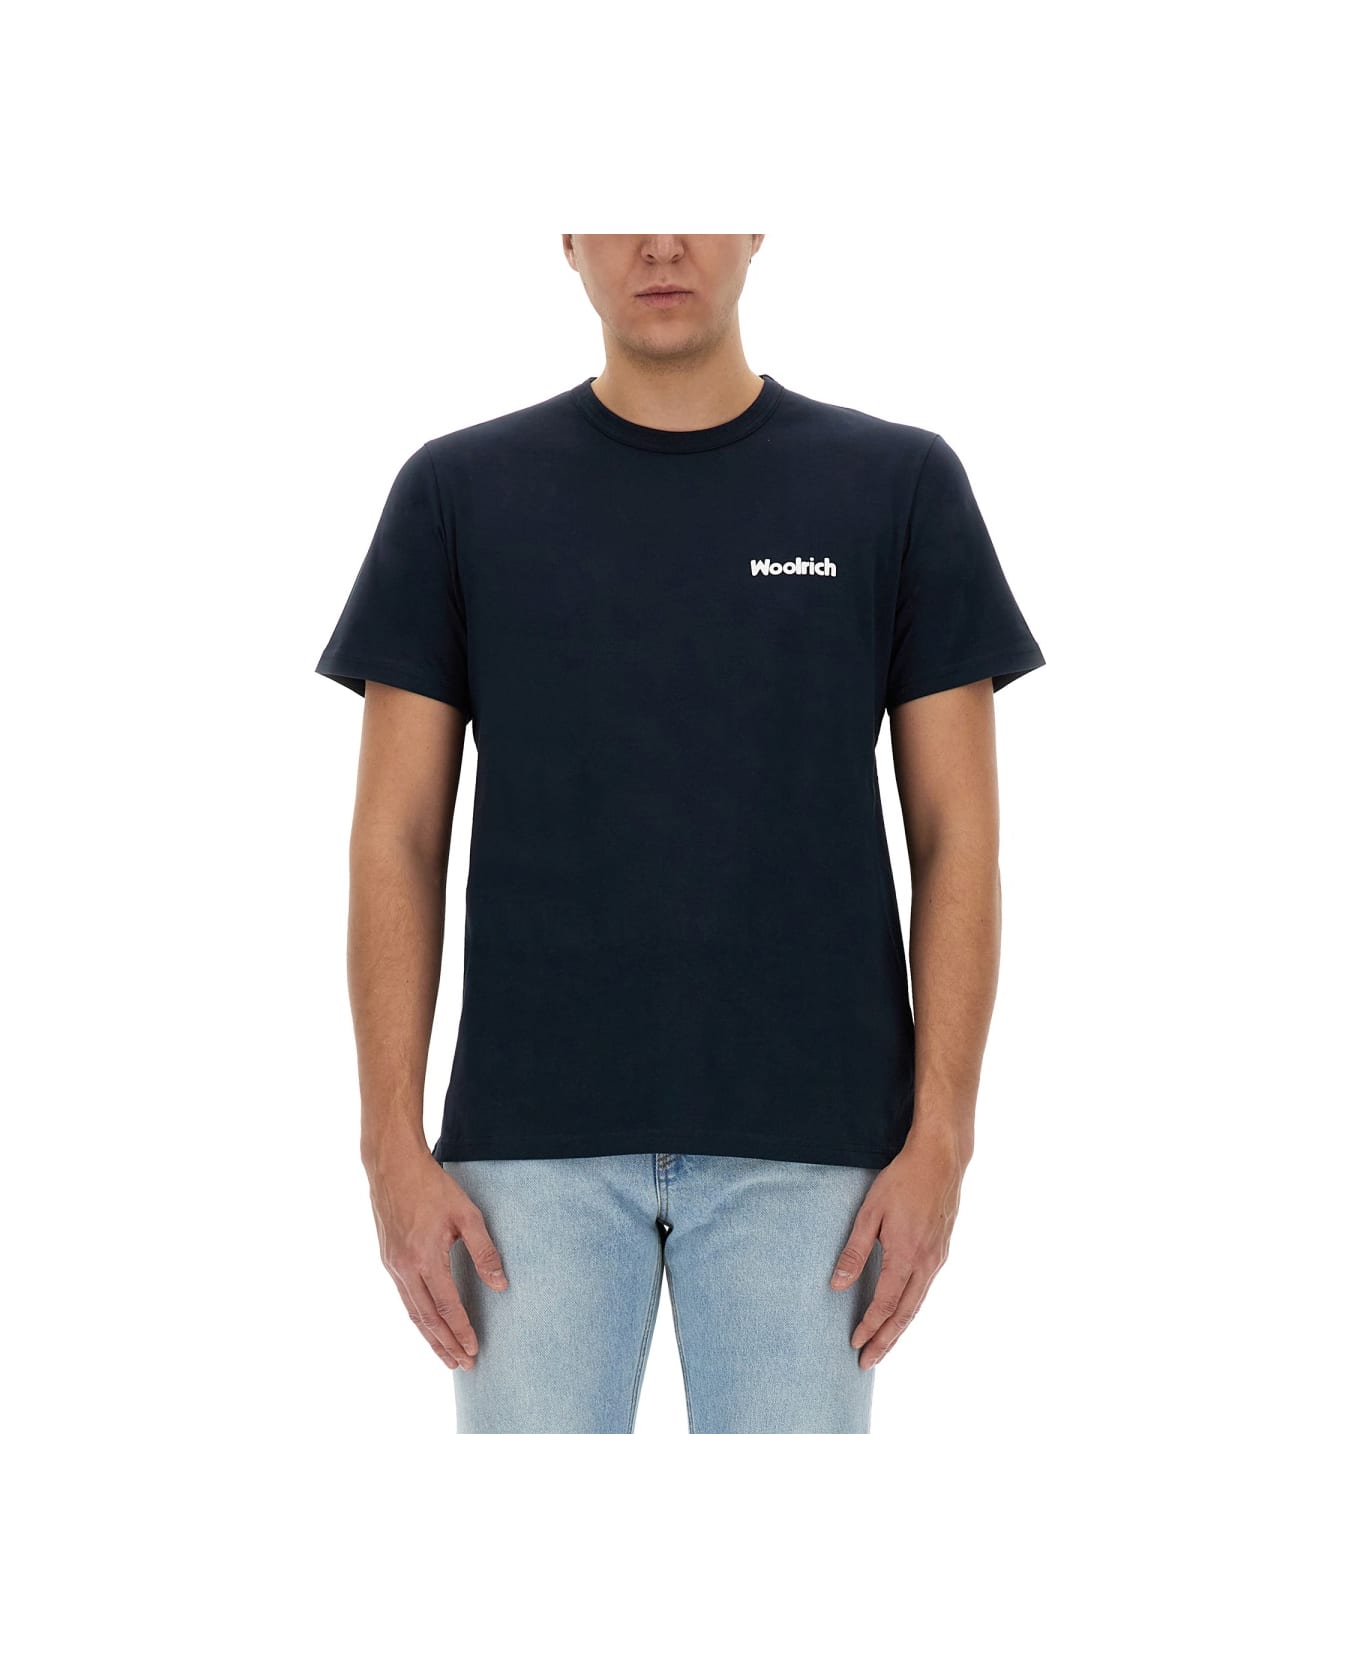 Woolrich T-shirt With Logo - BLUE